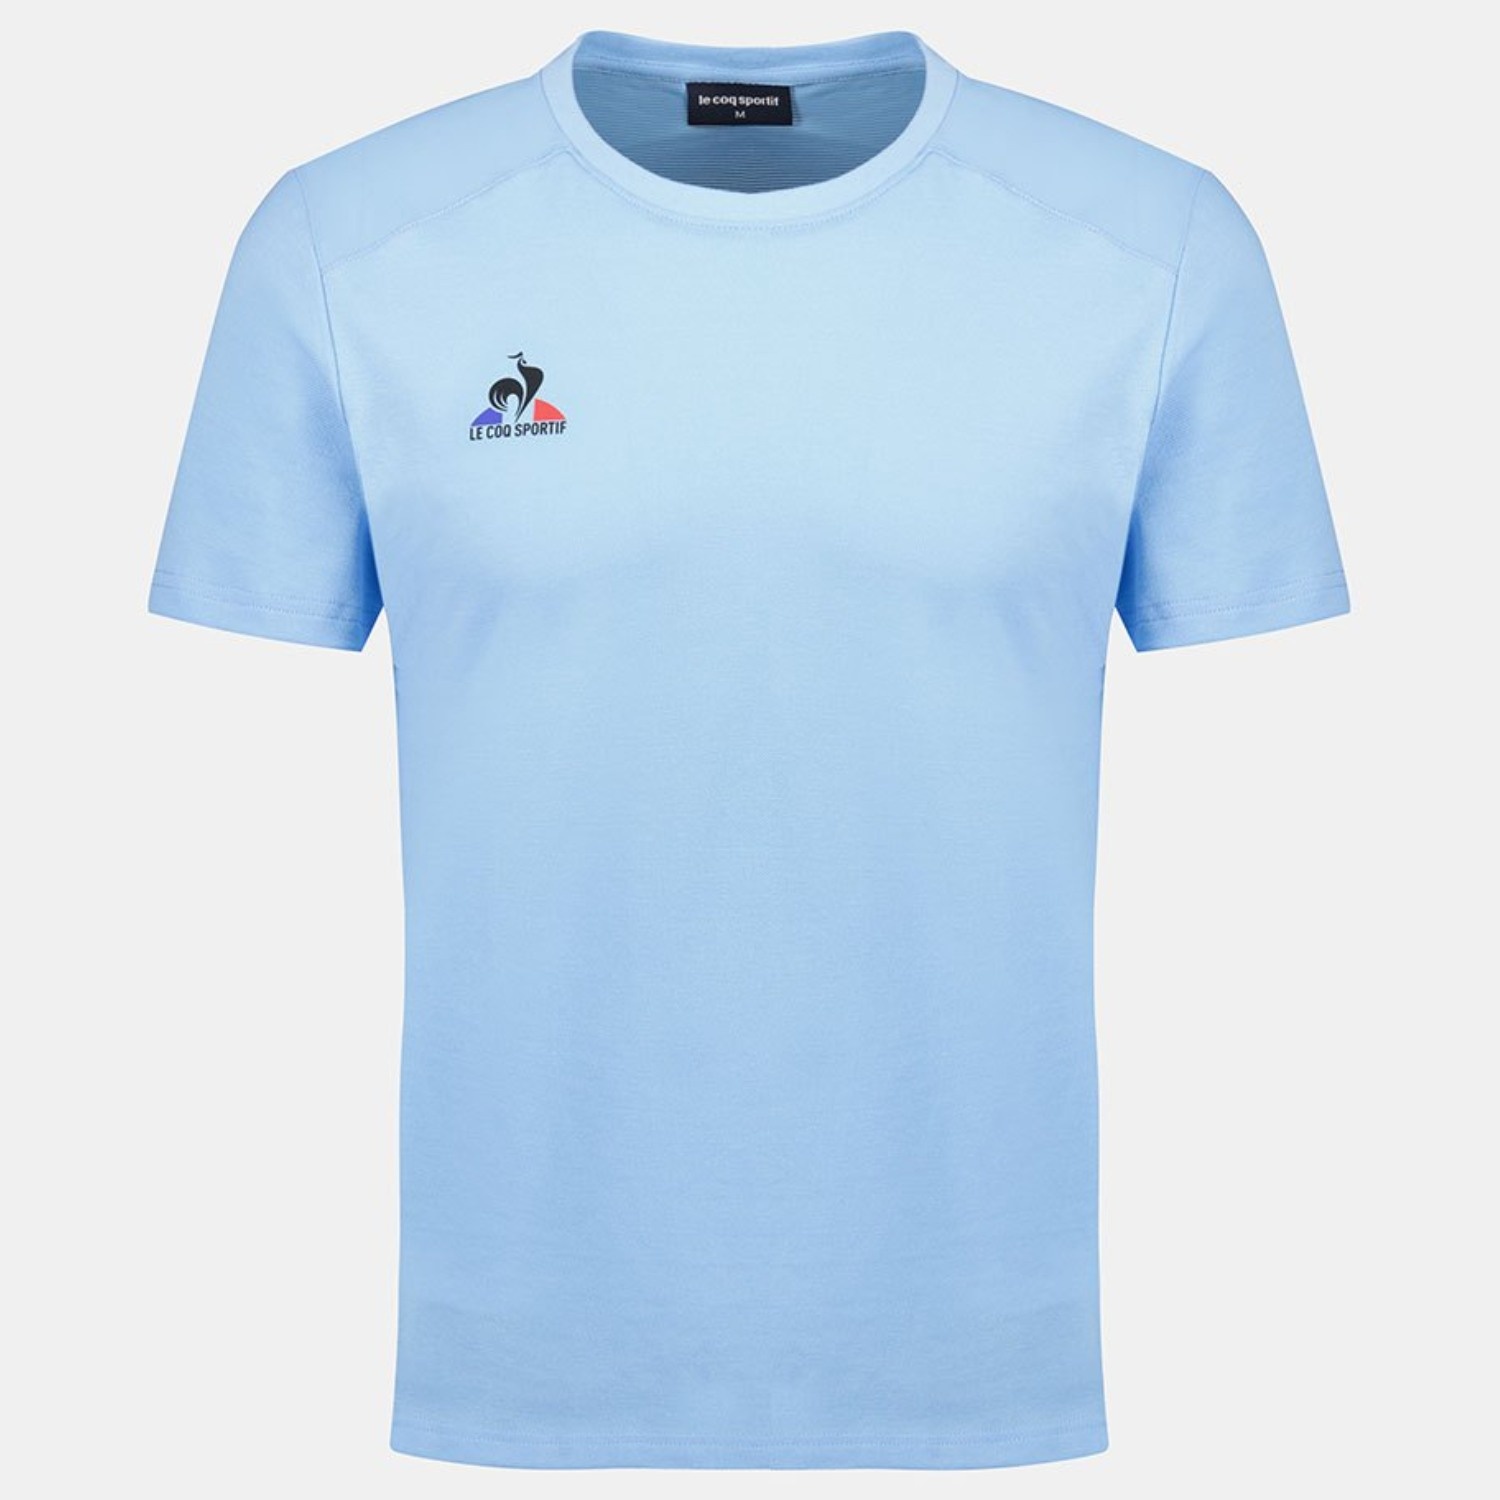 Le Coq Sportif T-Shirt Performance Fly Blue